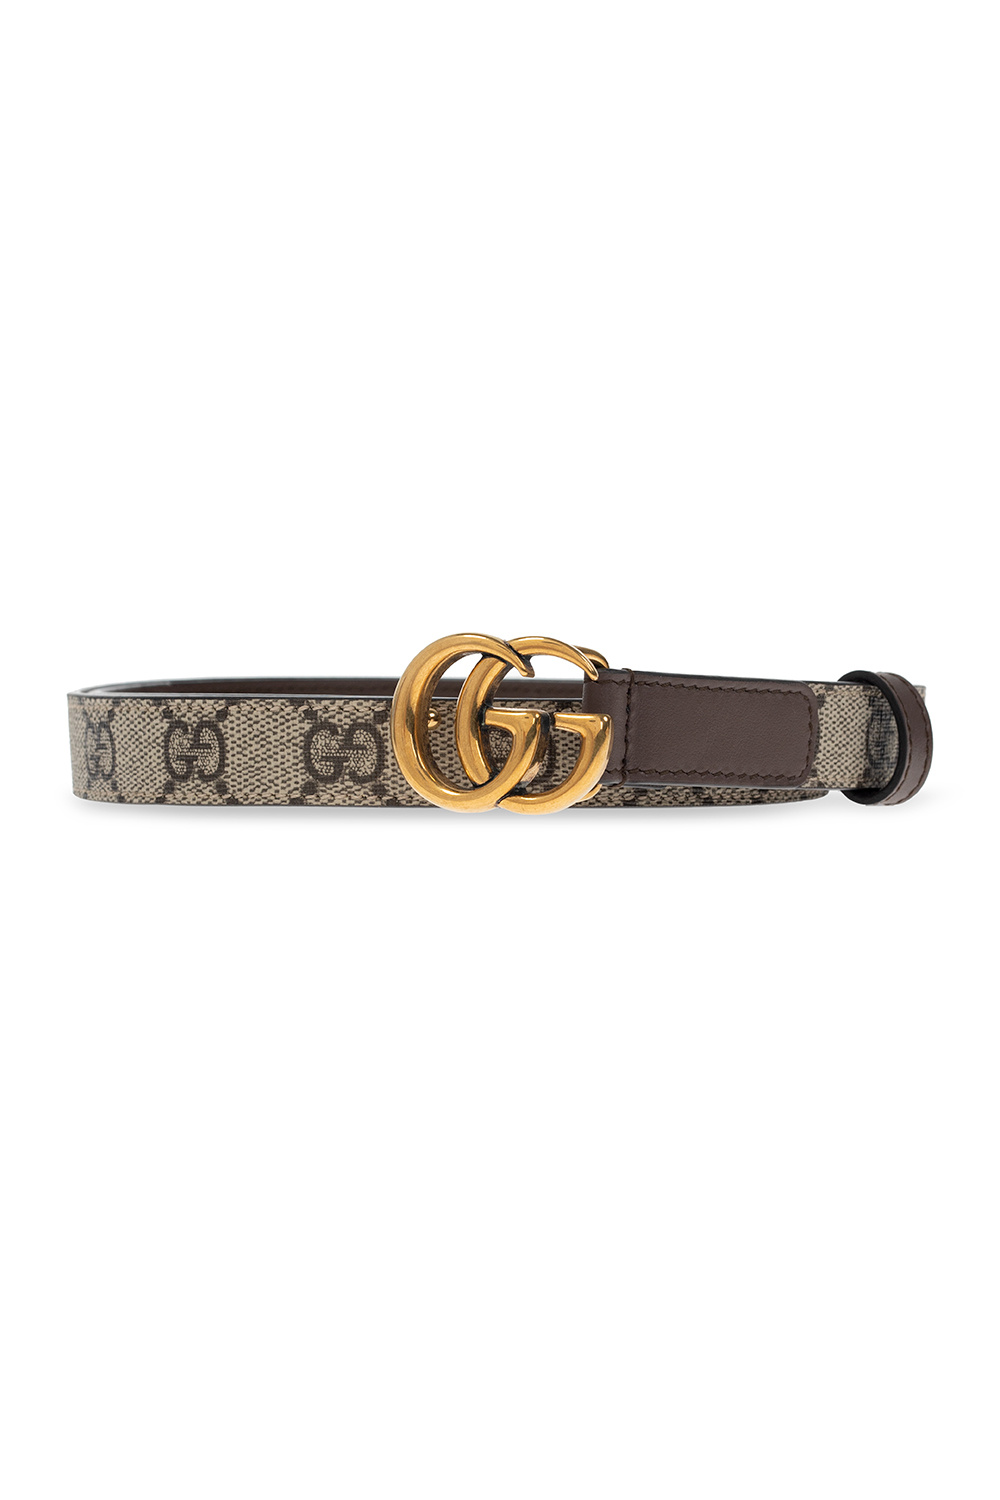 Gucci Leather belt, Women's Accessories